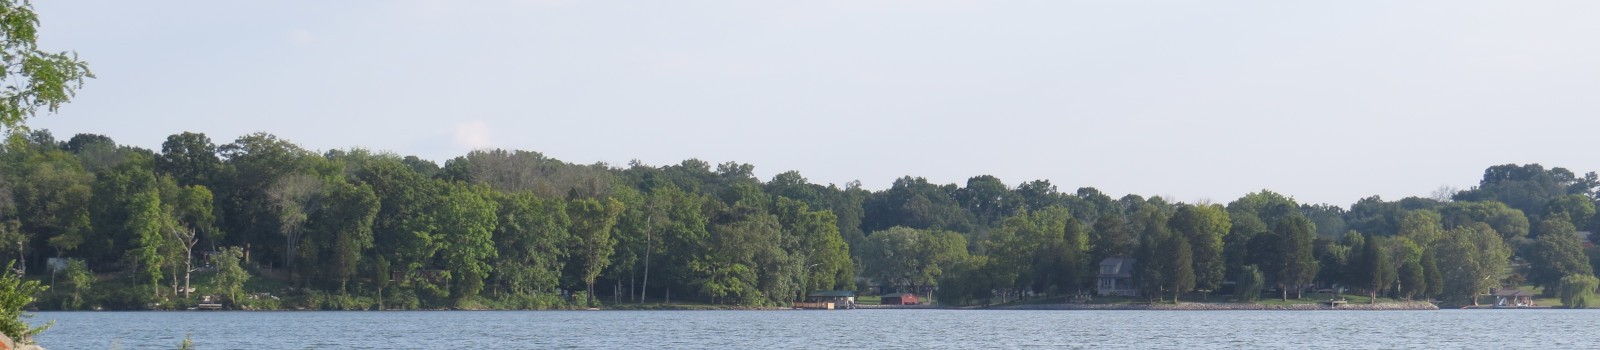 Lake header background